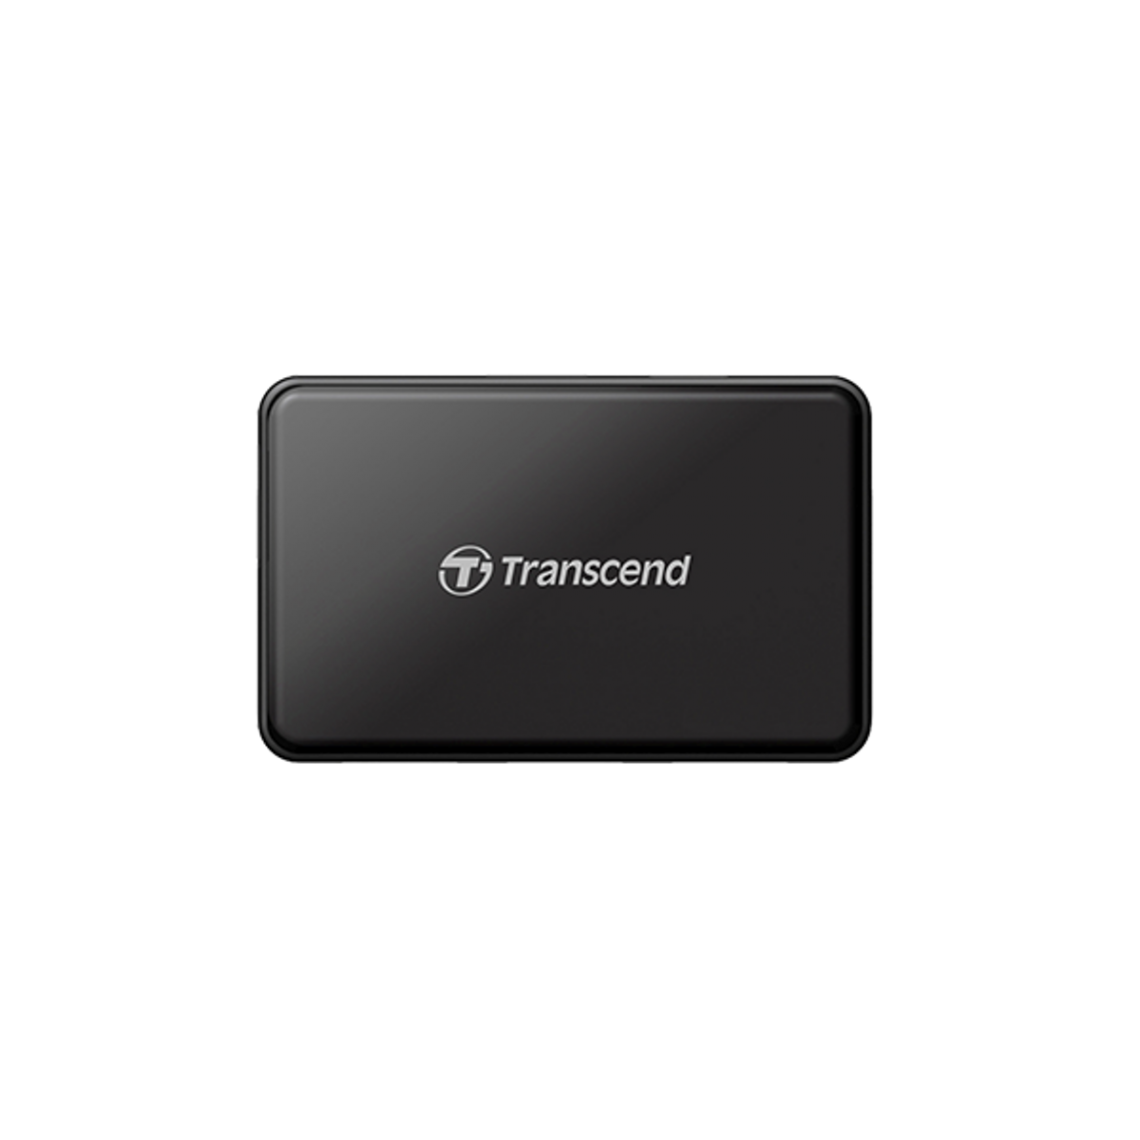 Transcend - HUB3 hub & concentrateur - 4 ports SuperSpeed USB 3.0 - Hub